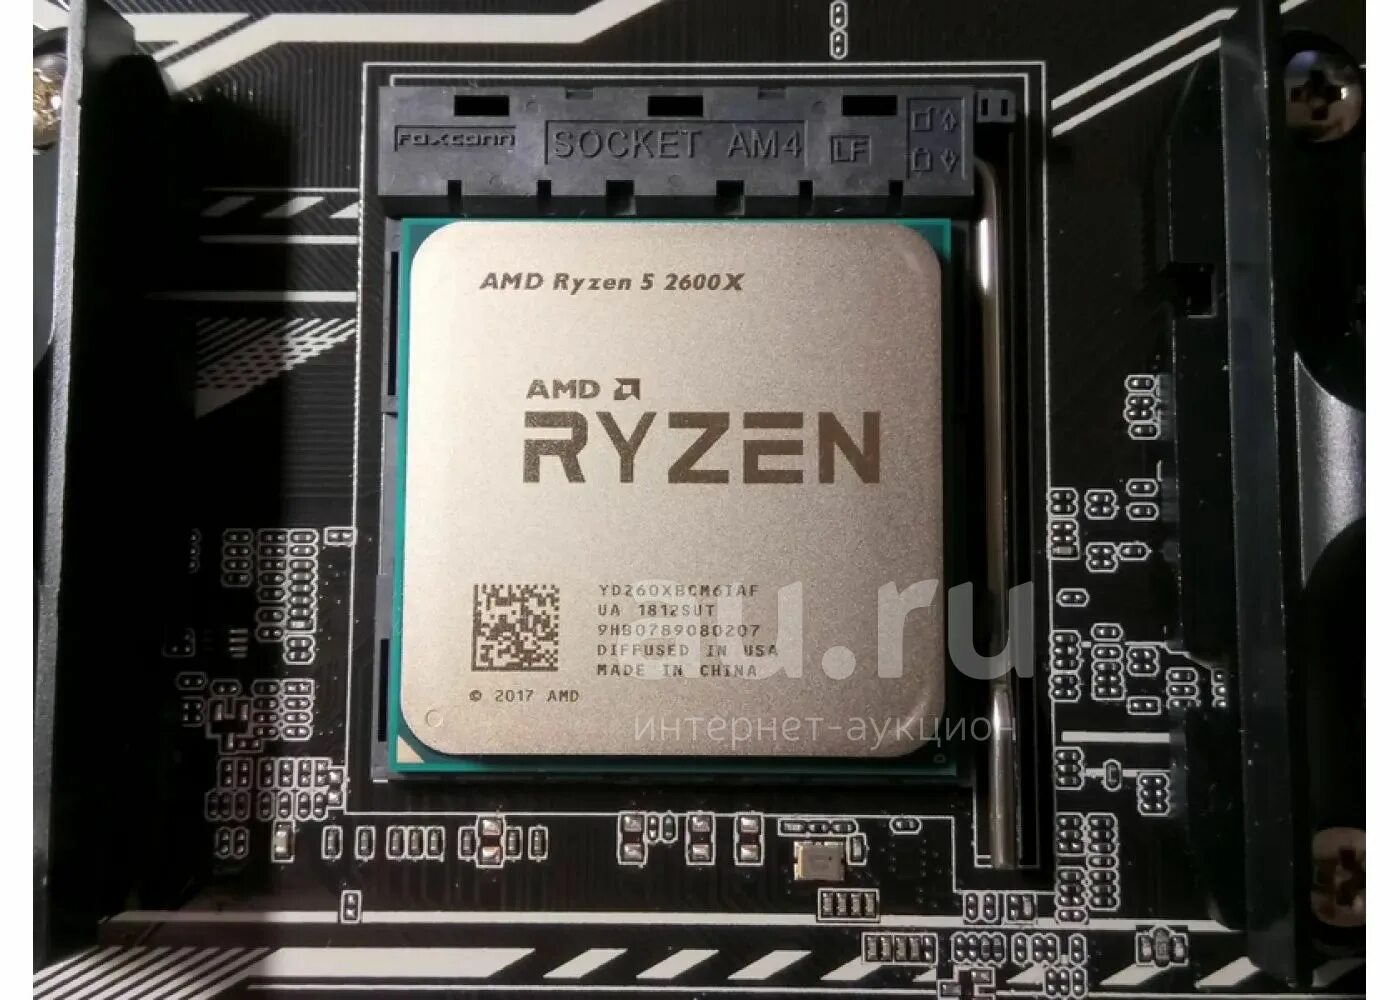 Ryzen 5 2600 память. AMD Ryzen 5 2600x (Box). AMD 5 2600. Процессор AMD Ryzen 5 2600, socketam4, Box. Ryzen 7 2600.